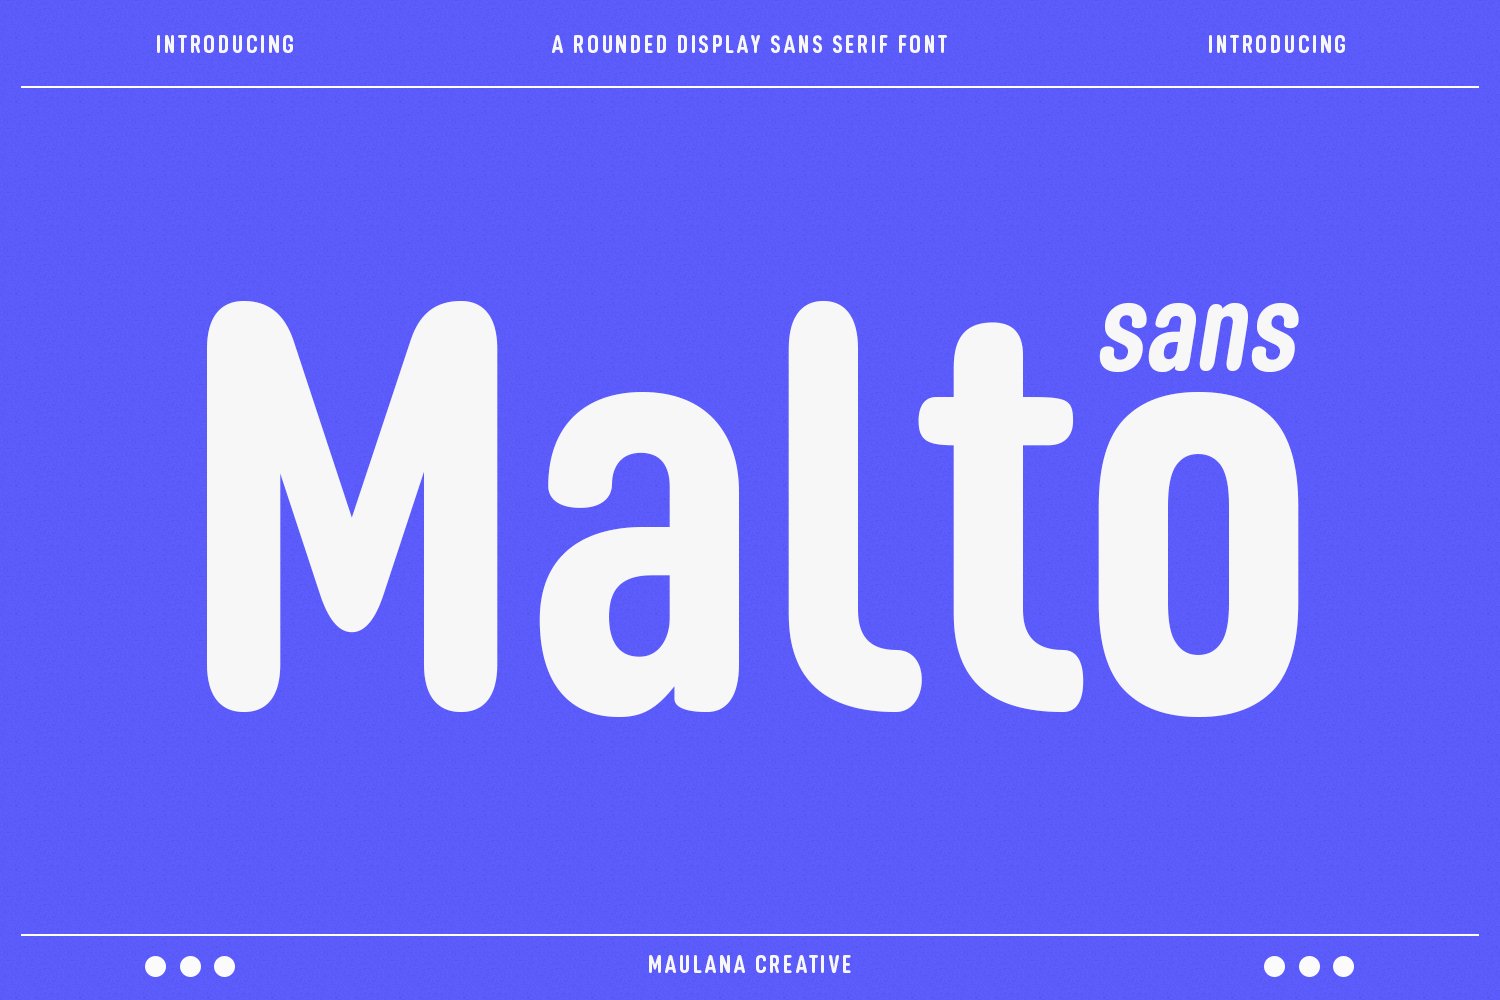 Malto Display Sans cover image.